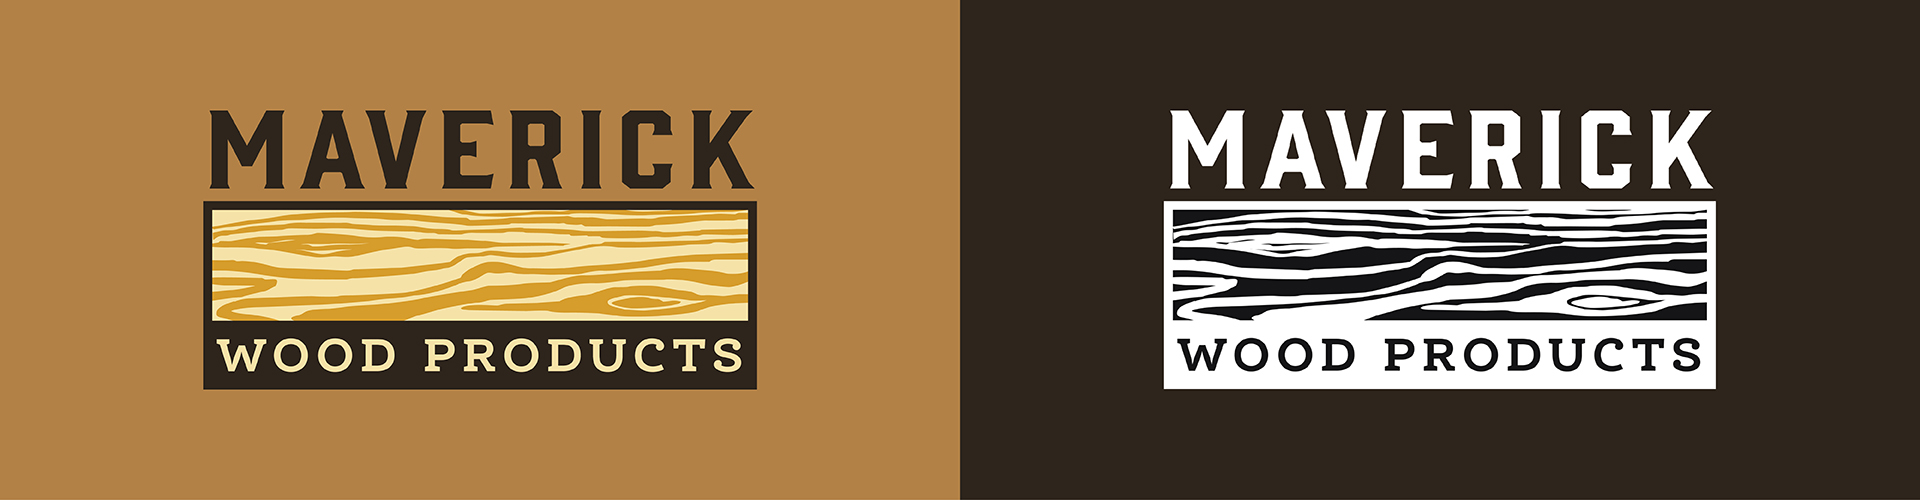 Maverick Wood Products Logo